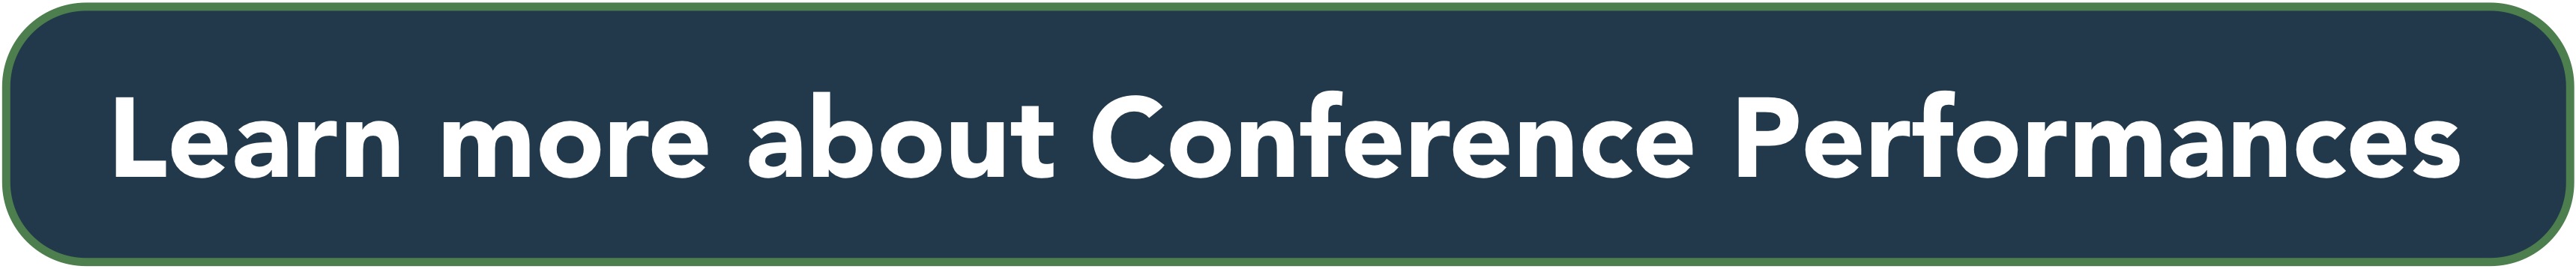 Conference Performances Button